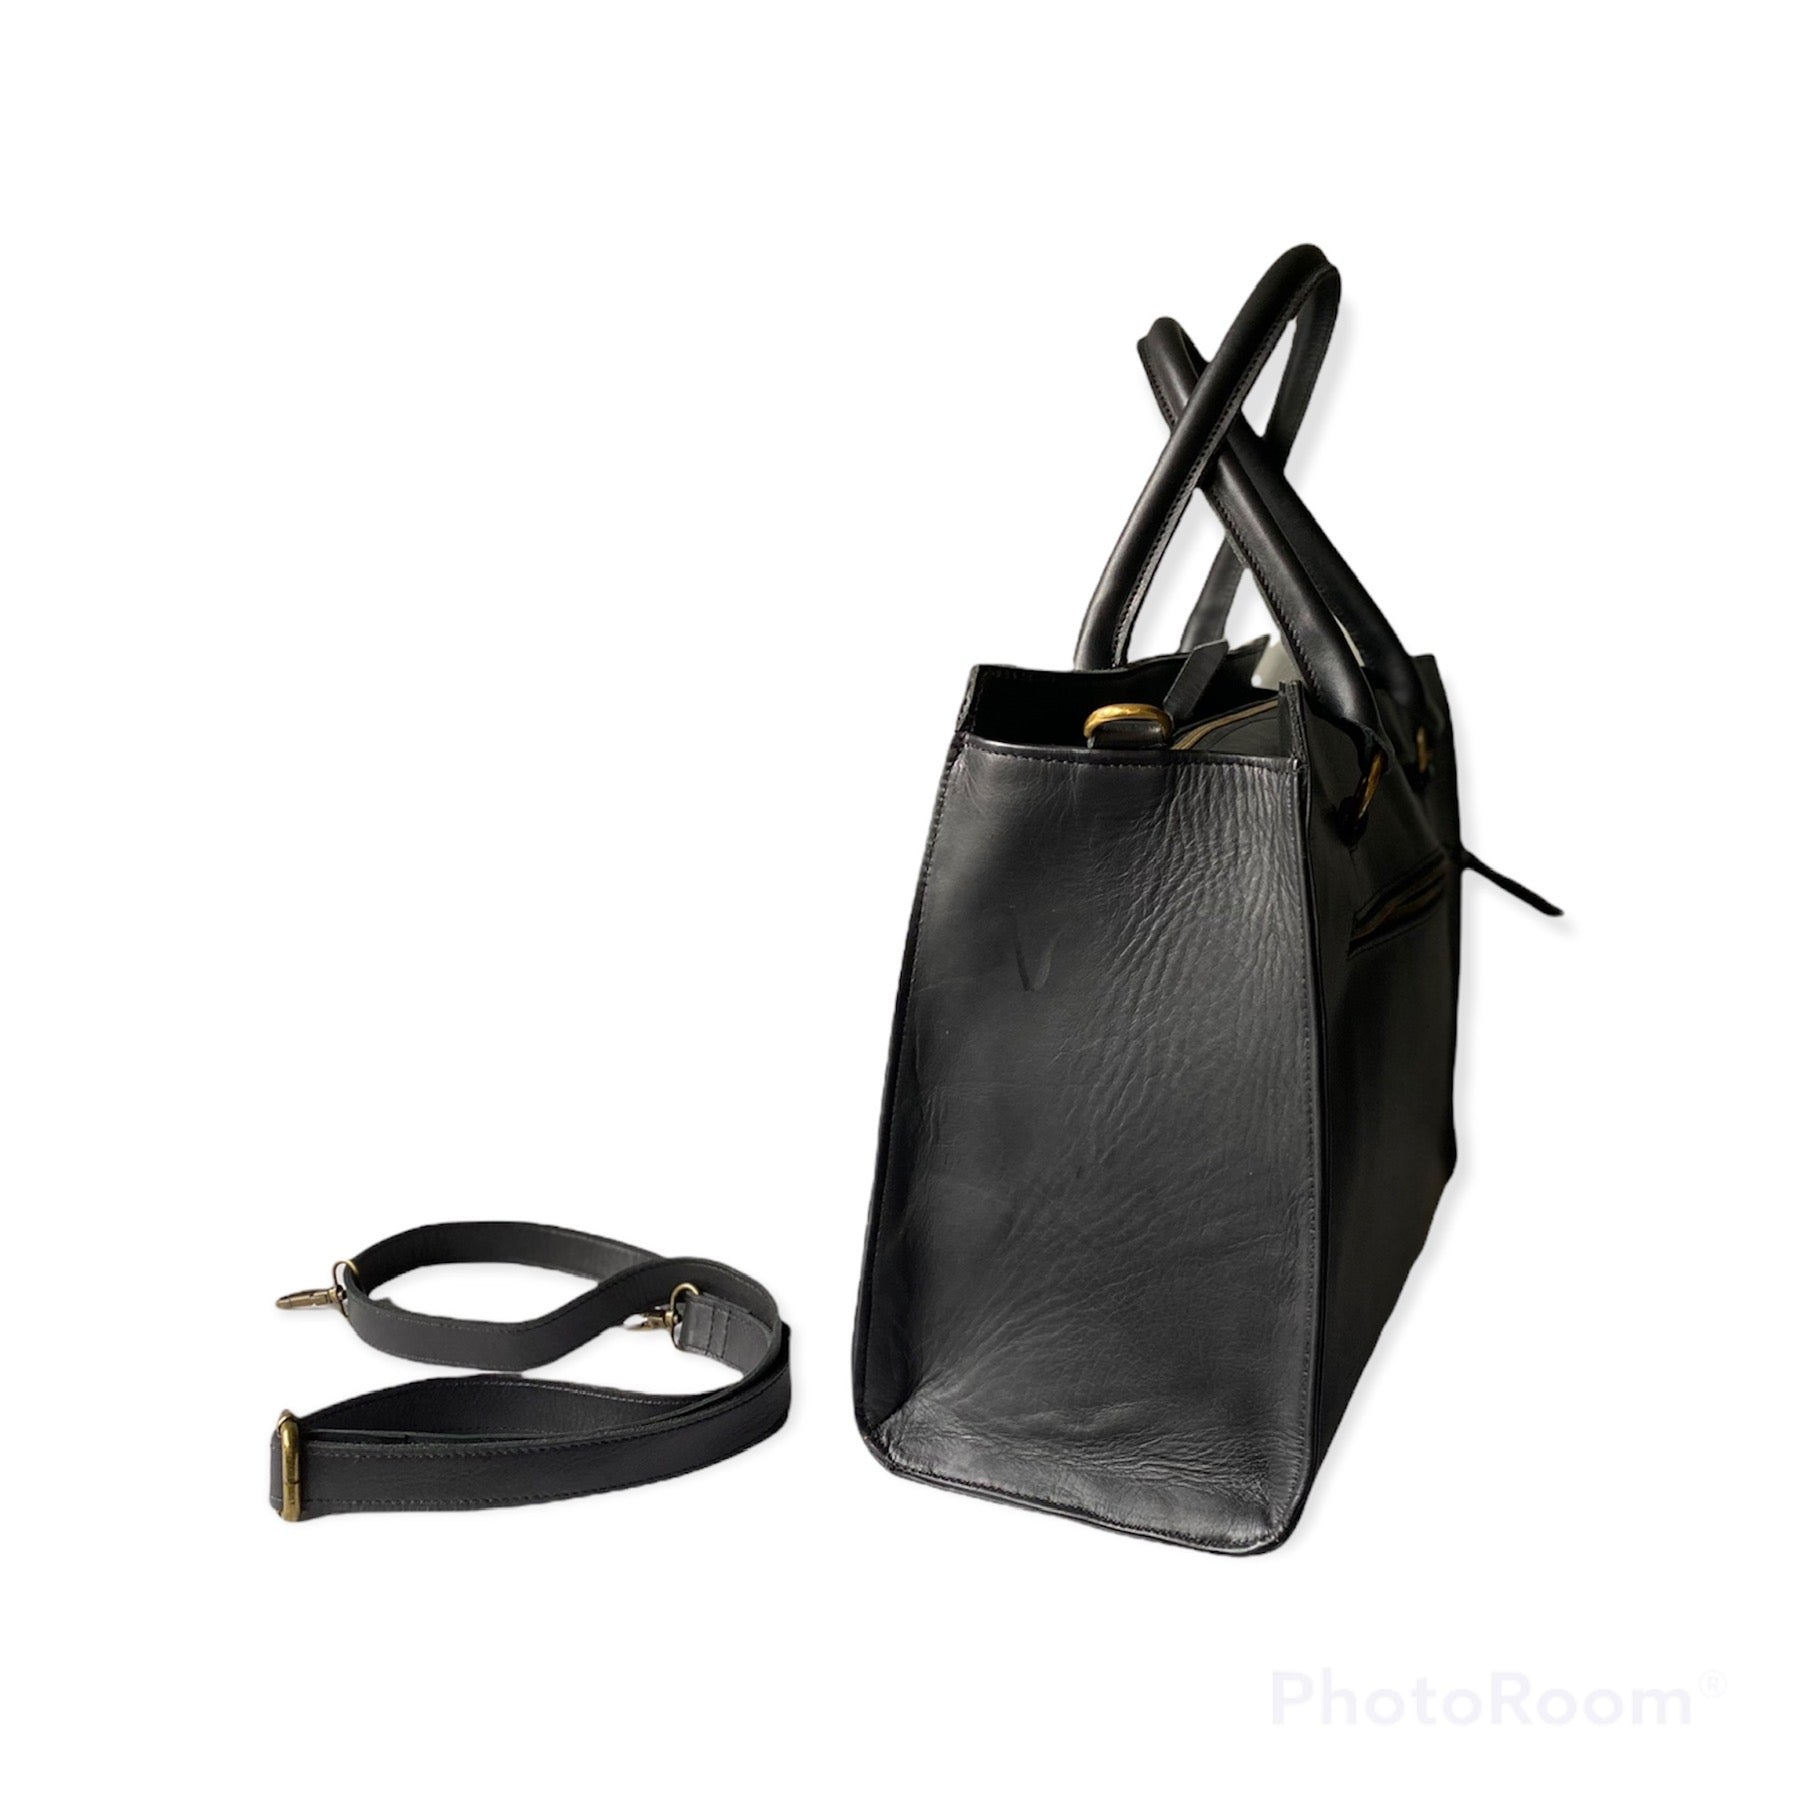 GENUINE PULL-UP LEATHER Work Laptop Shoulder Bag for Women - Tobmarc Home Decor & Gifts 